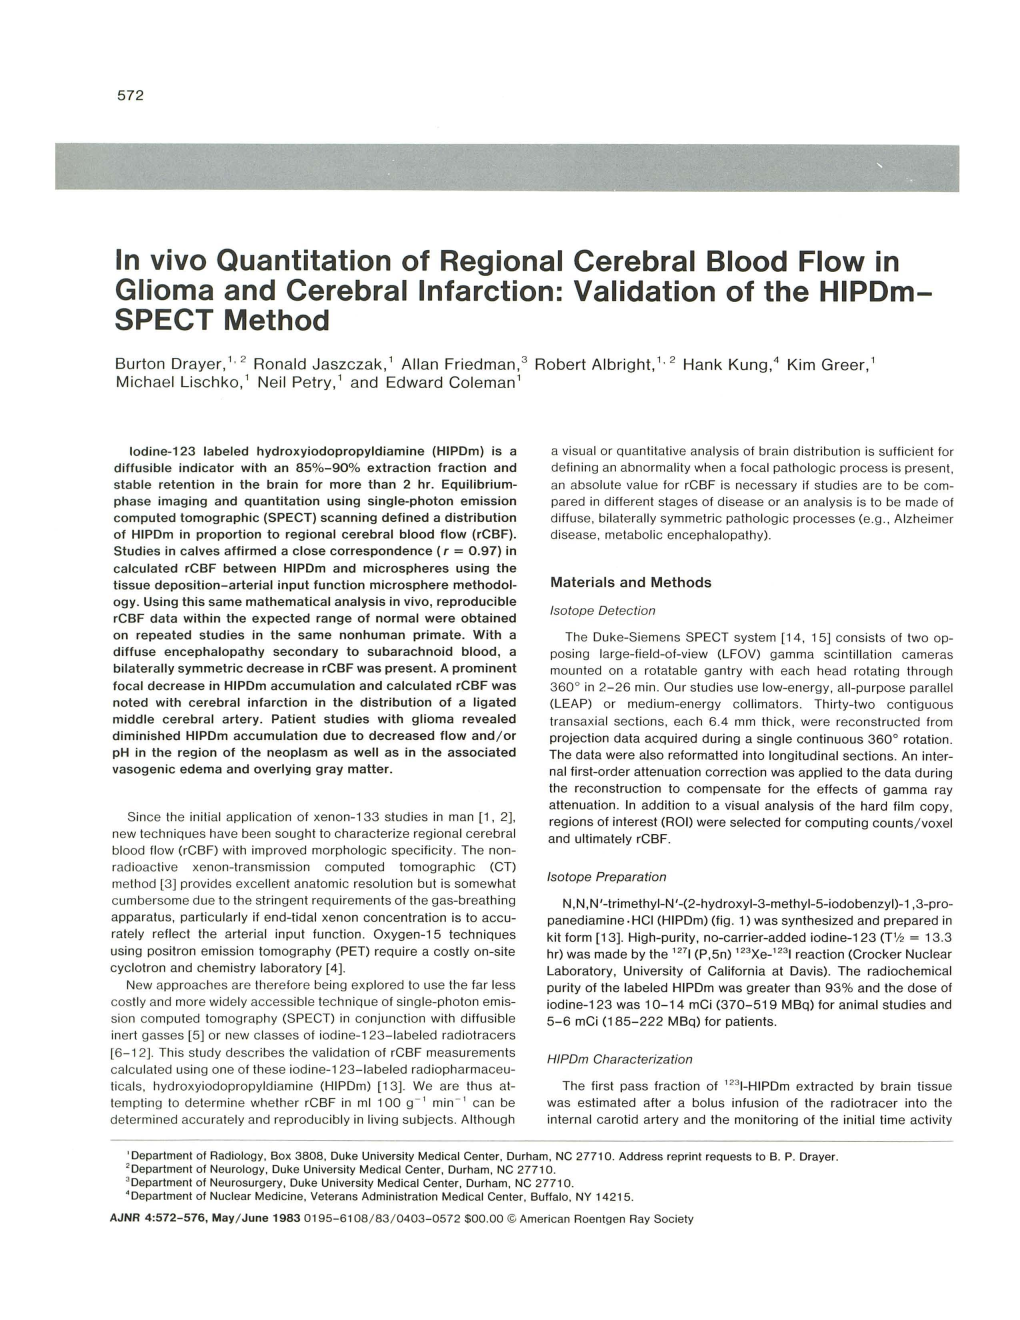 In Vivo Quantitation of Regional Cerebral Blood Flow in Glioma and Cerebral Infarction: Validation of the Hipdm­ SPECT Method